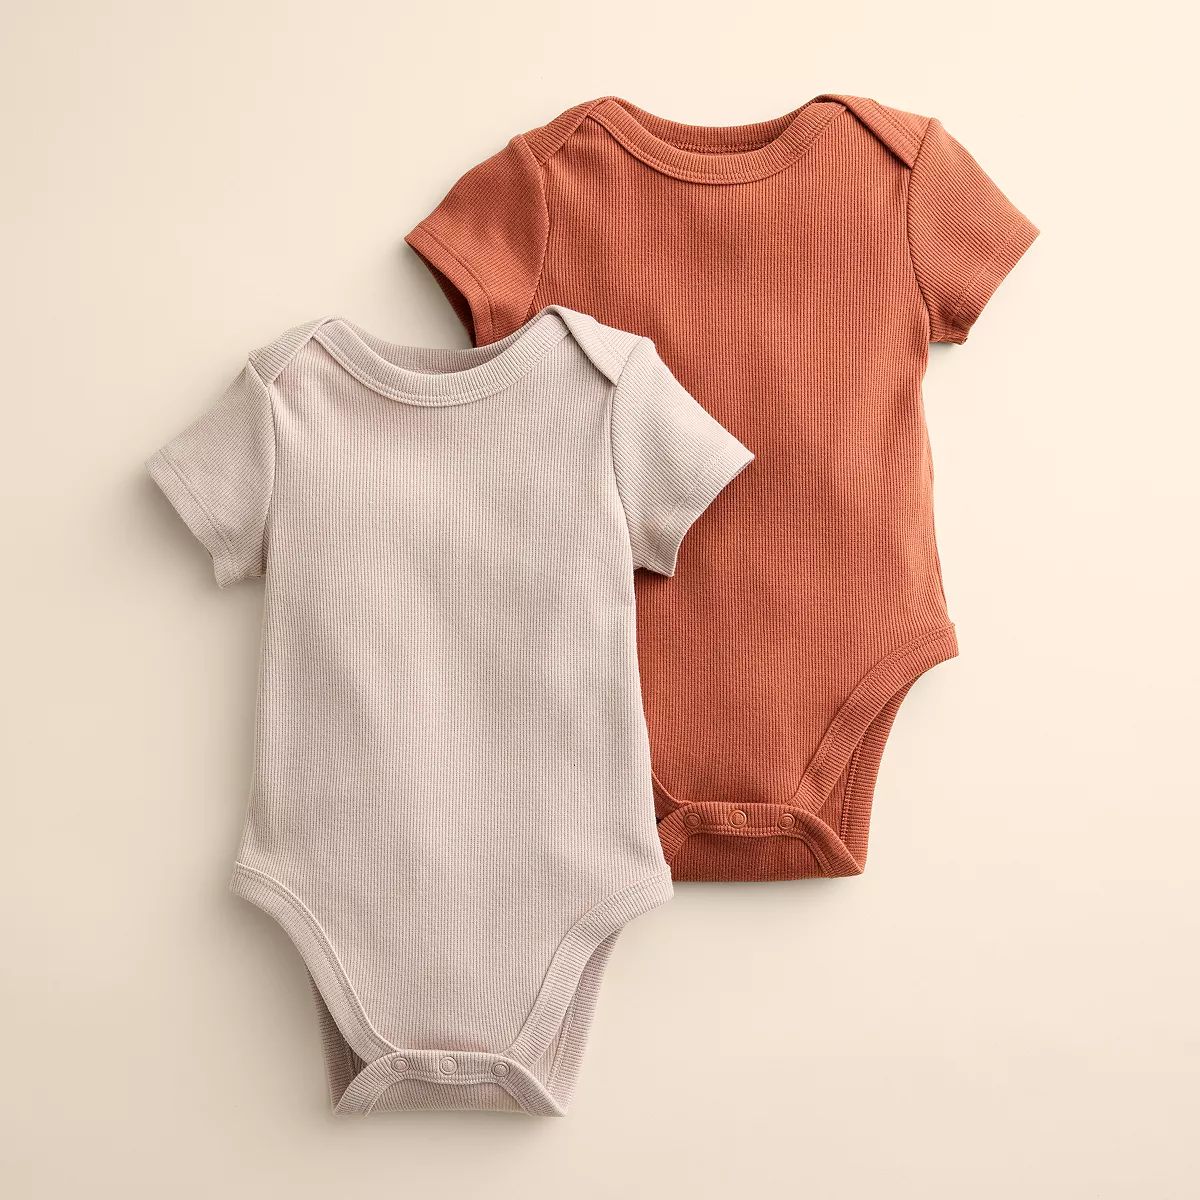 Baby Little Co. by Lauren Conrad 2-Pack Short Sleeve Bodysuits | Kohl's